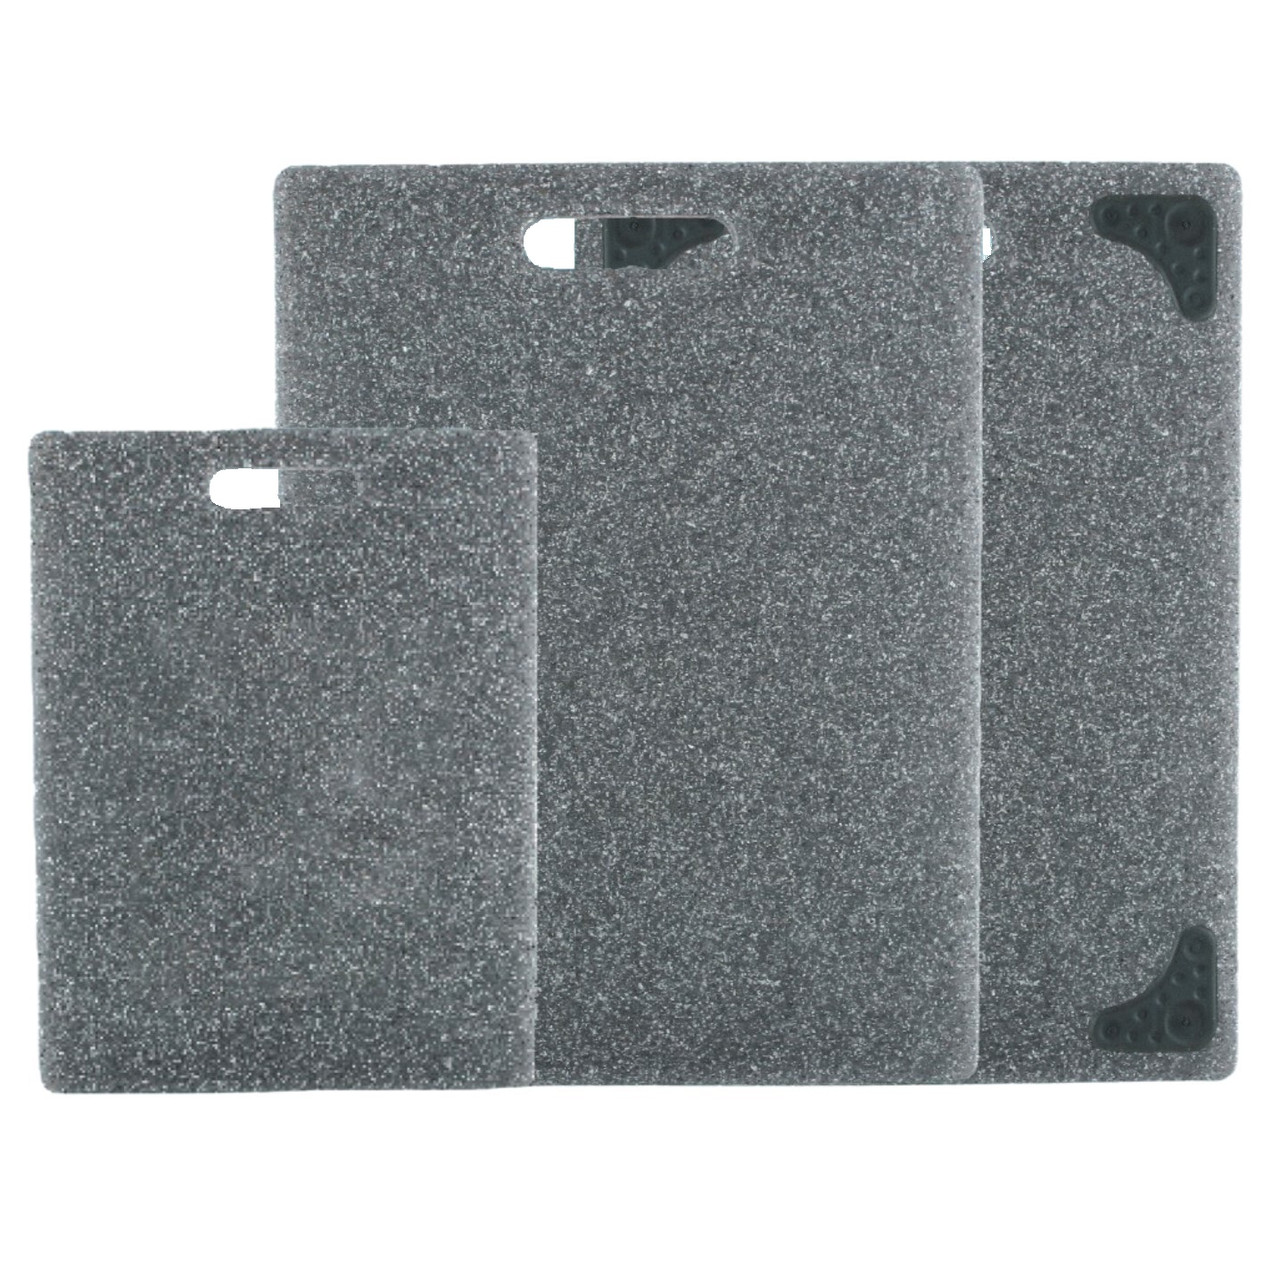 Dexas PolyGranite SuperBoard® - Heavy Granite Cutting Board - 8.5